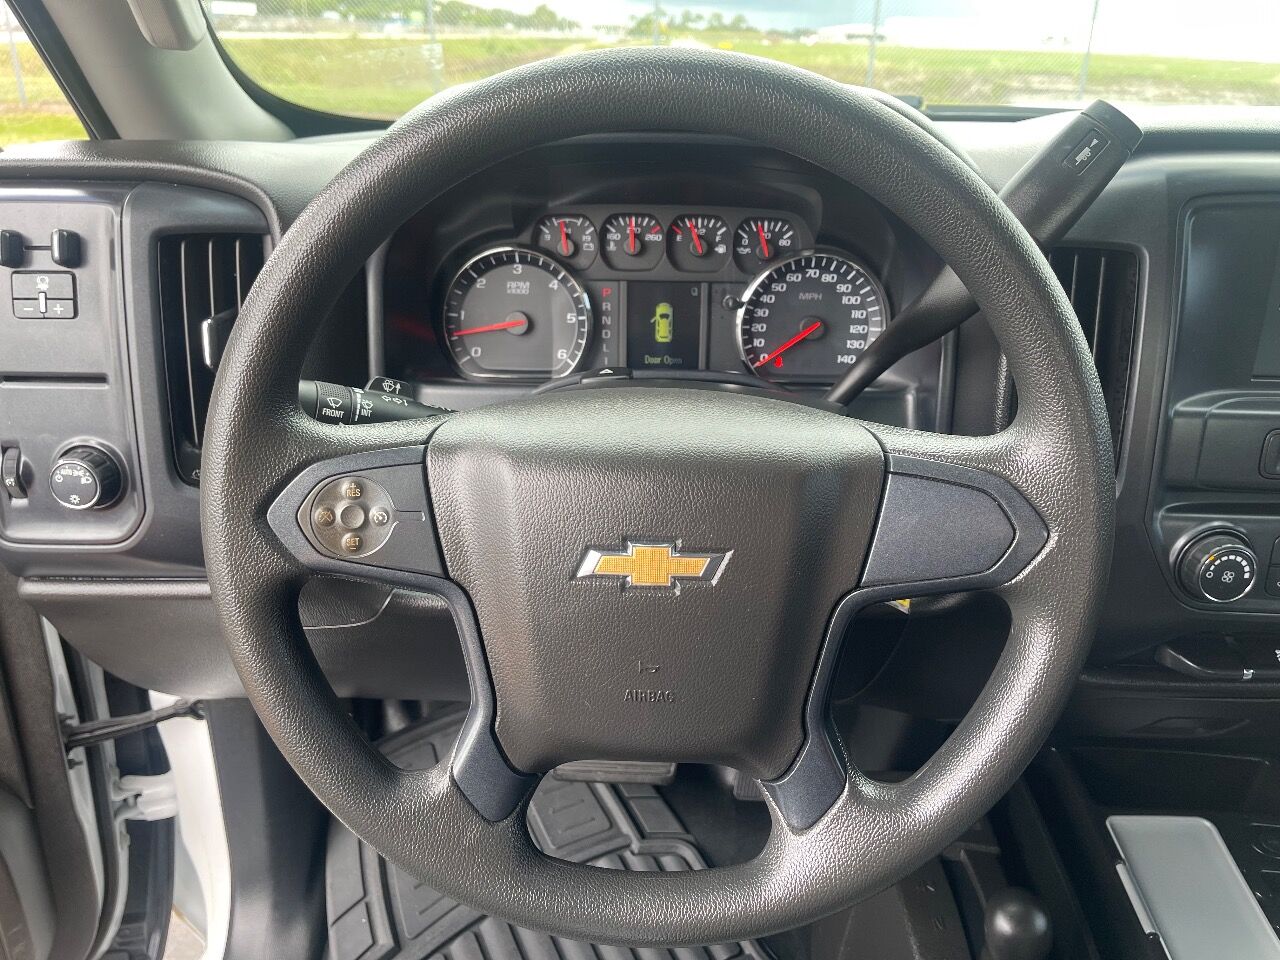 2019 Chevrolet Silverado HD Pickup - $37,900